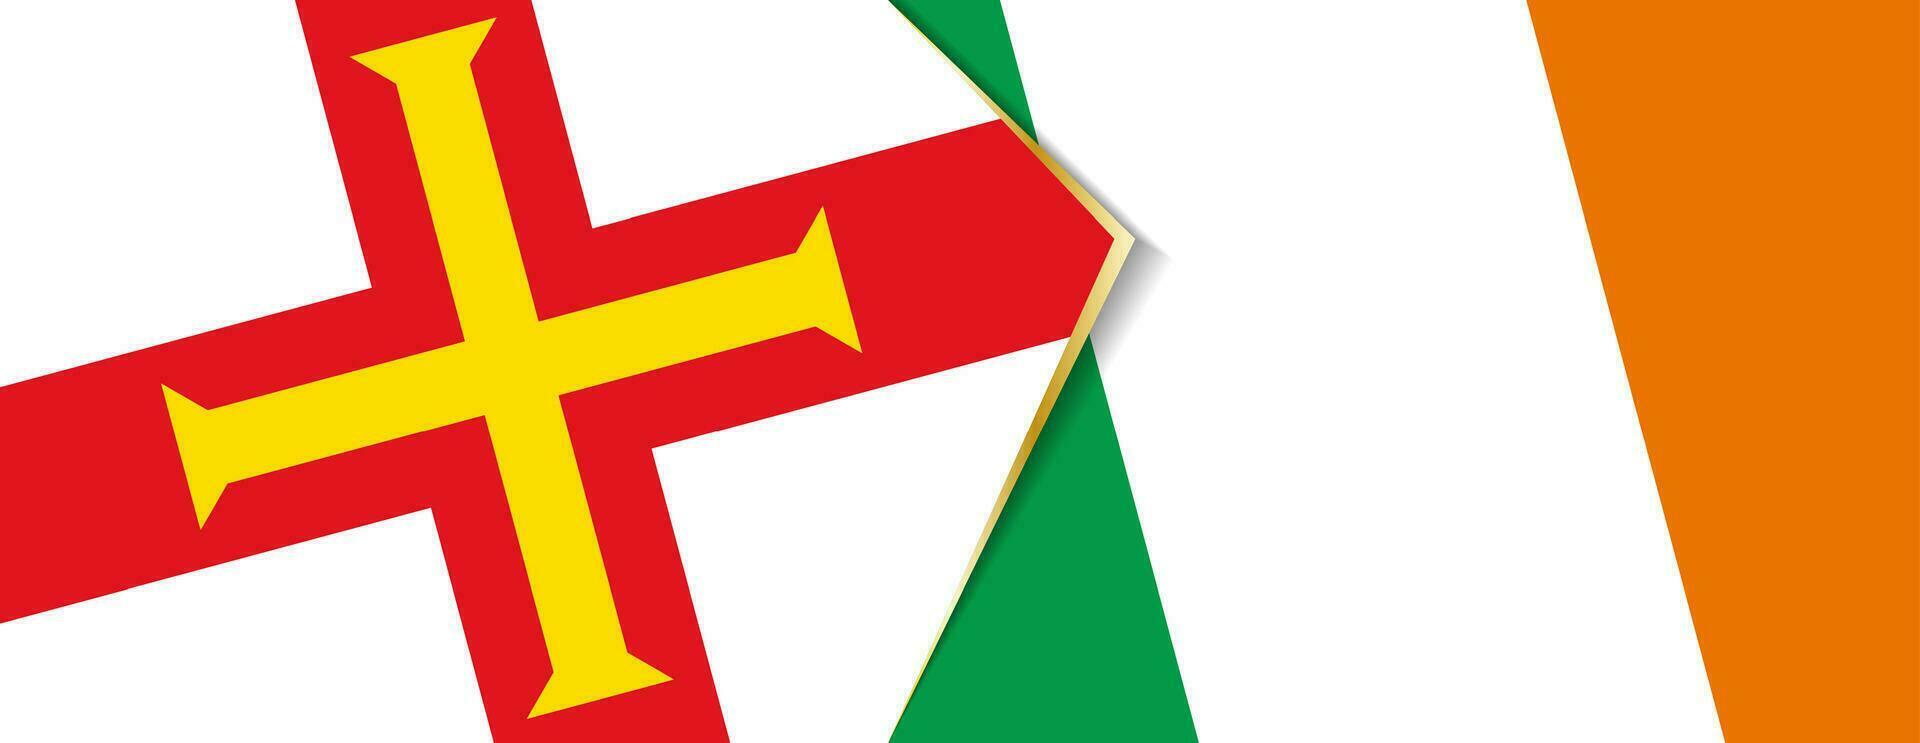 Guernsey en Ierland vlaggen, twee vector vlaggen.